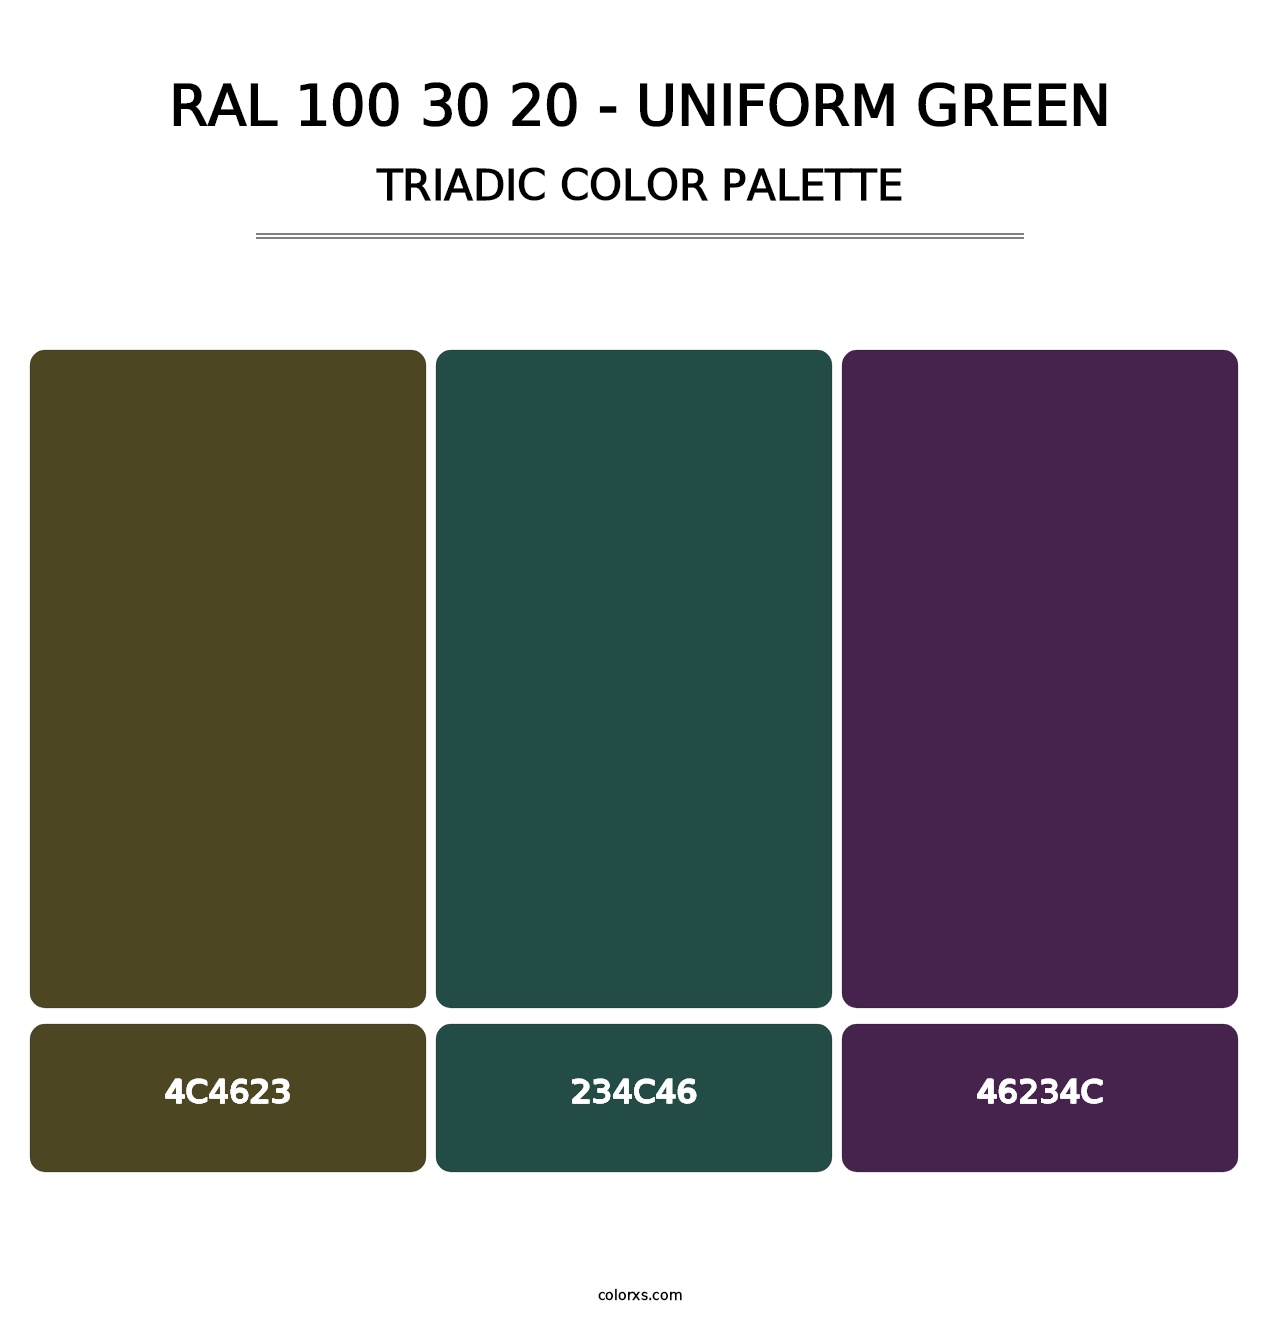 RAL 100 30 20 - Uniform Green - Triadic Color Palette